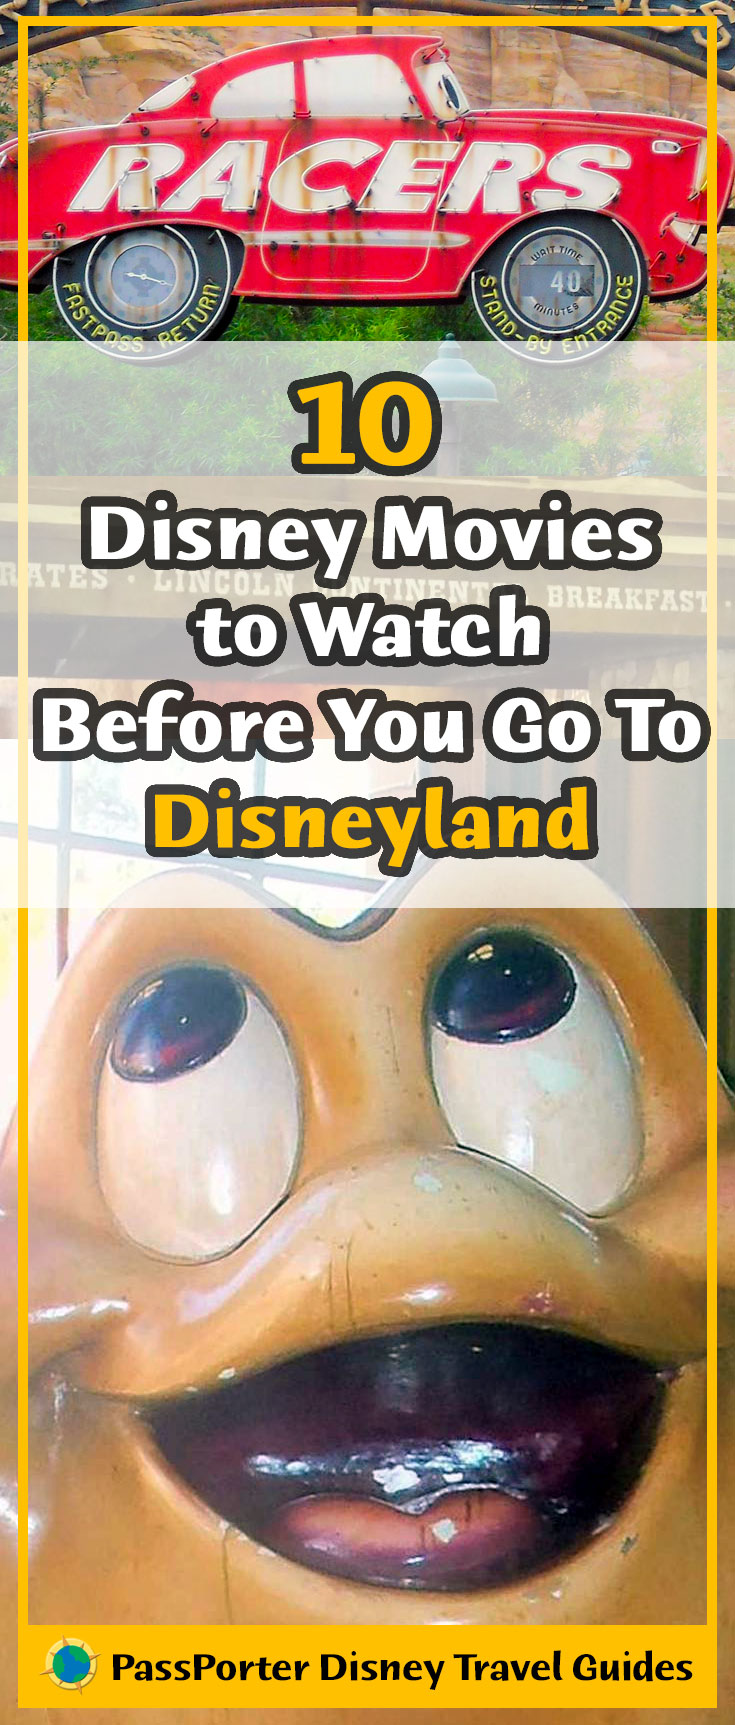 Watch the movies before you experience the Disneyland attractions | Disneyland Resort | PassPorter.com